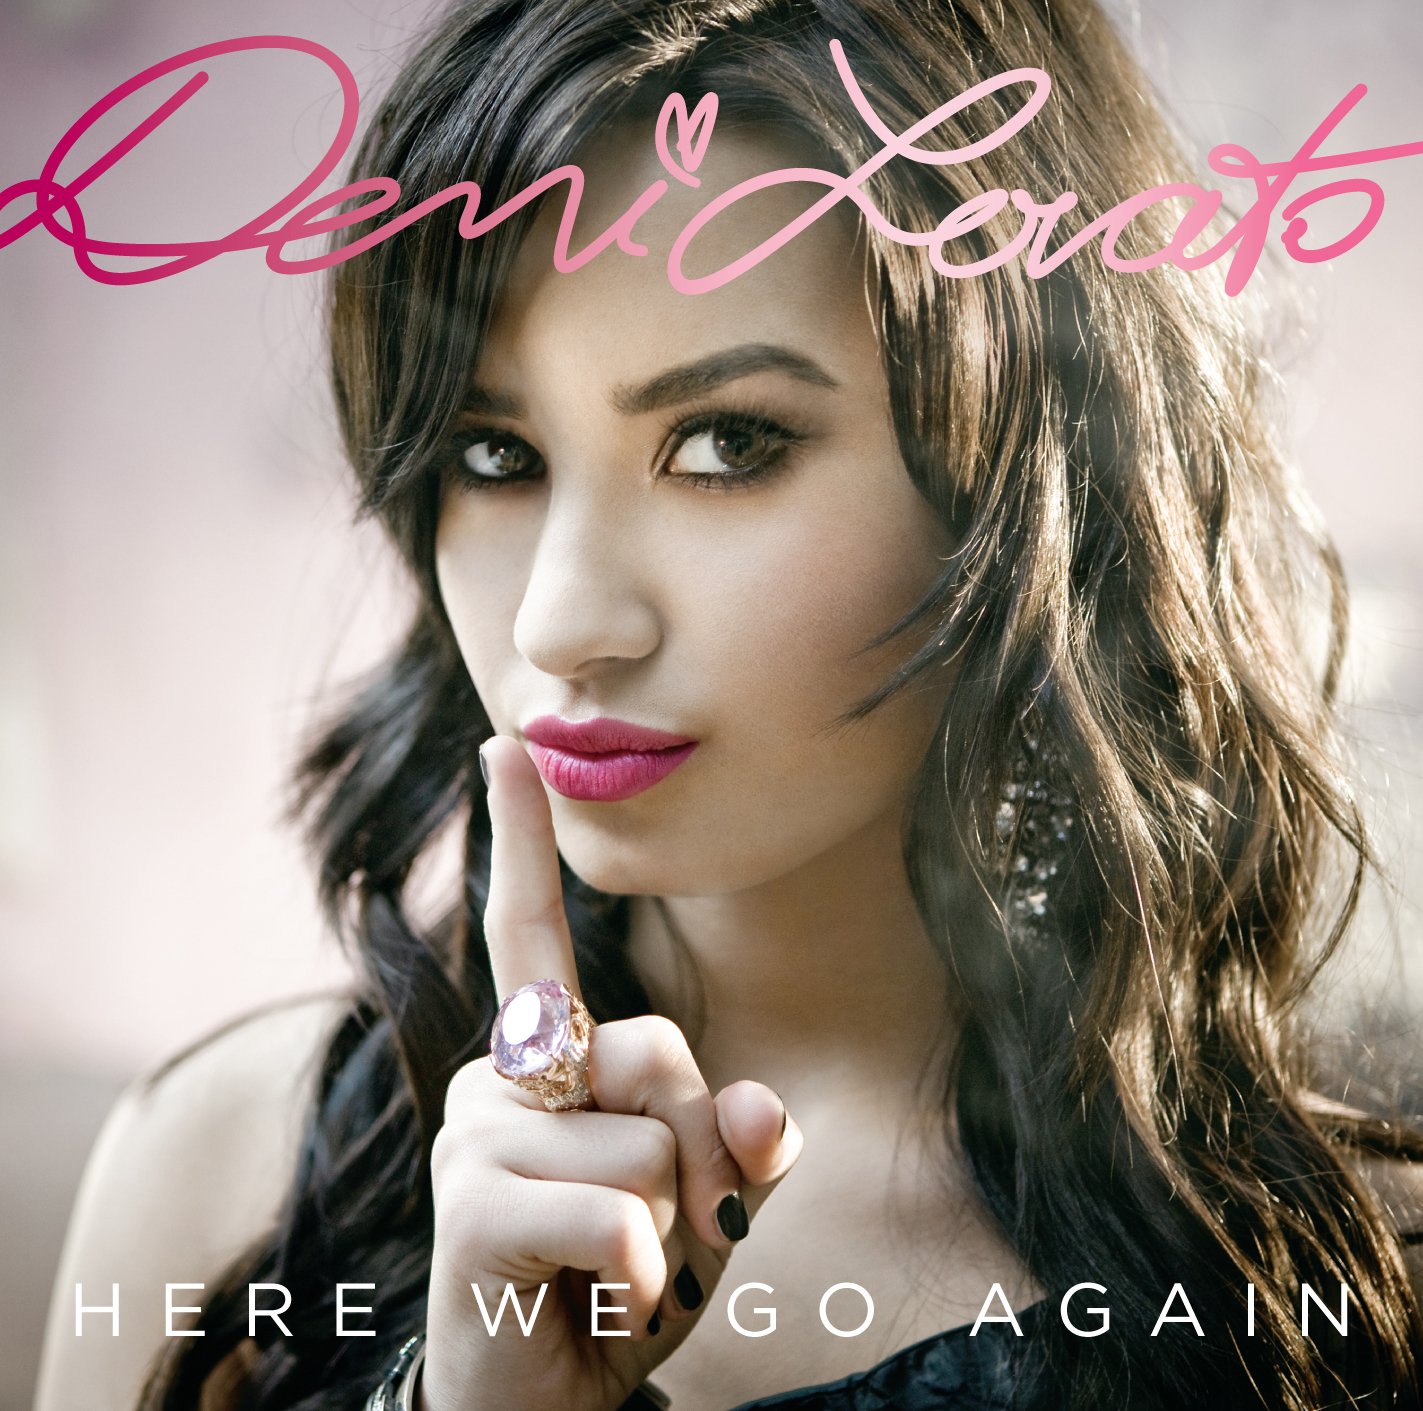 Sorry Not Sorry, Wiki Demi Lovato